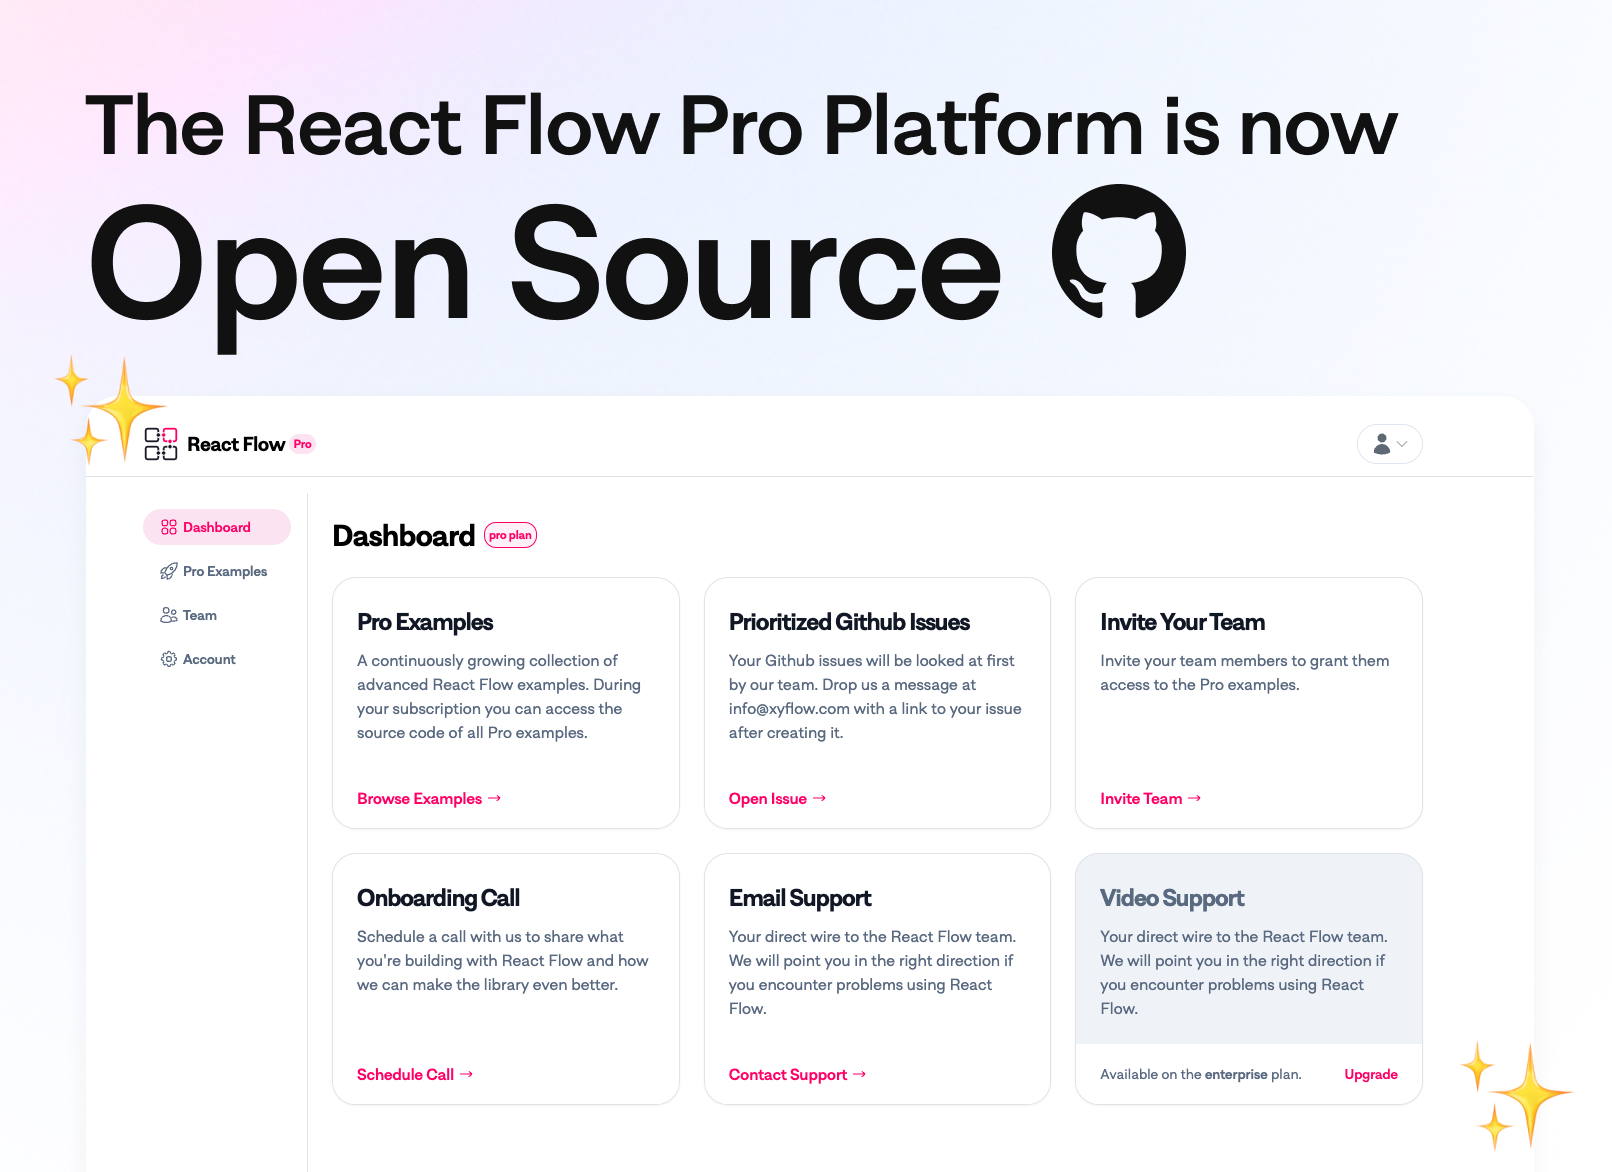 A screenshot of the new Pro Platform design.